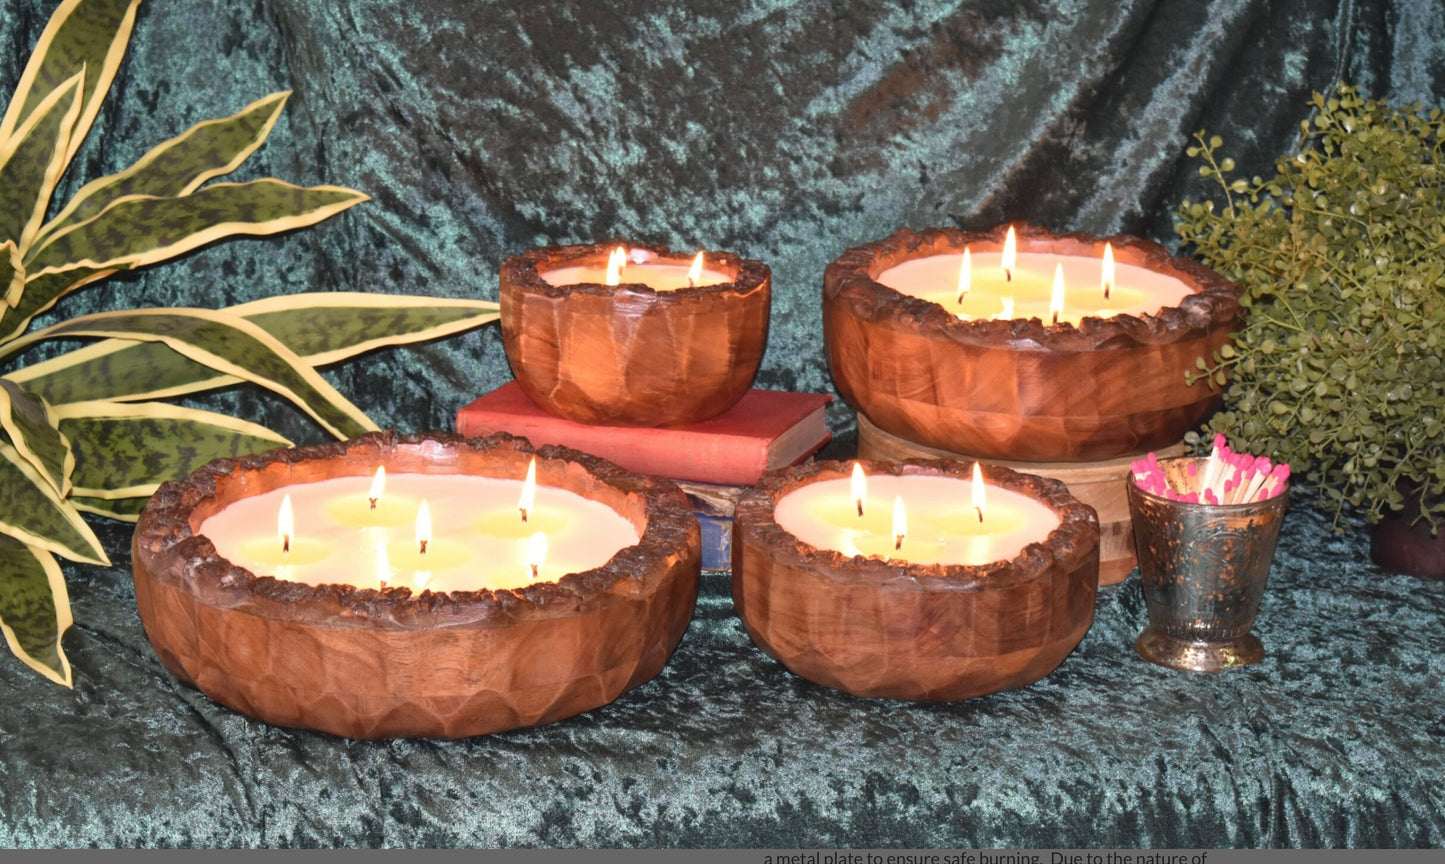 Himalayan Wood Bowel Handmade Soy Candle